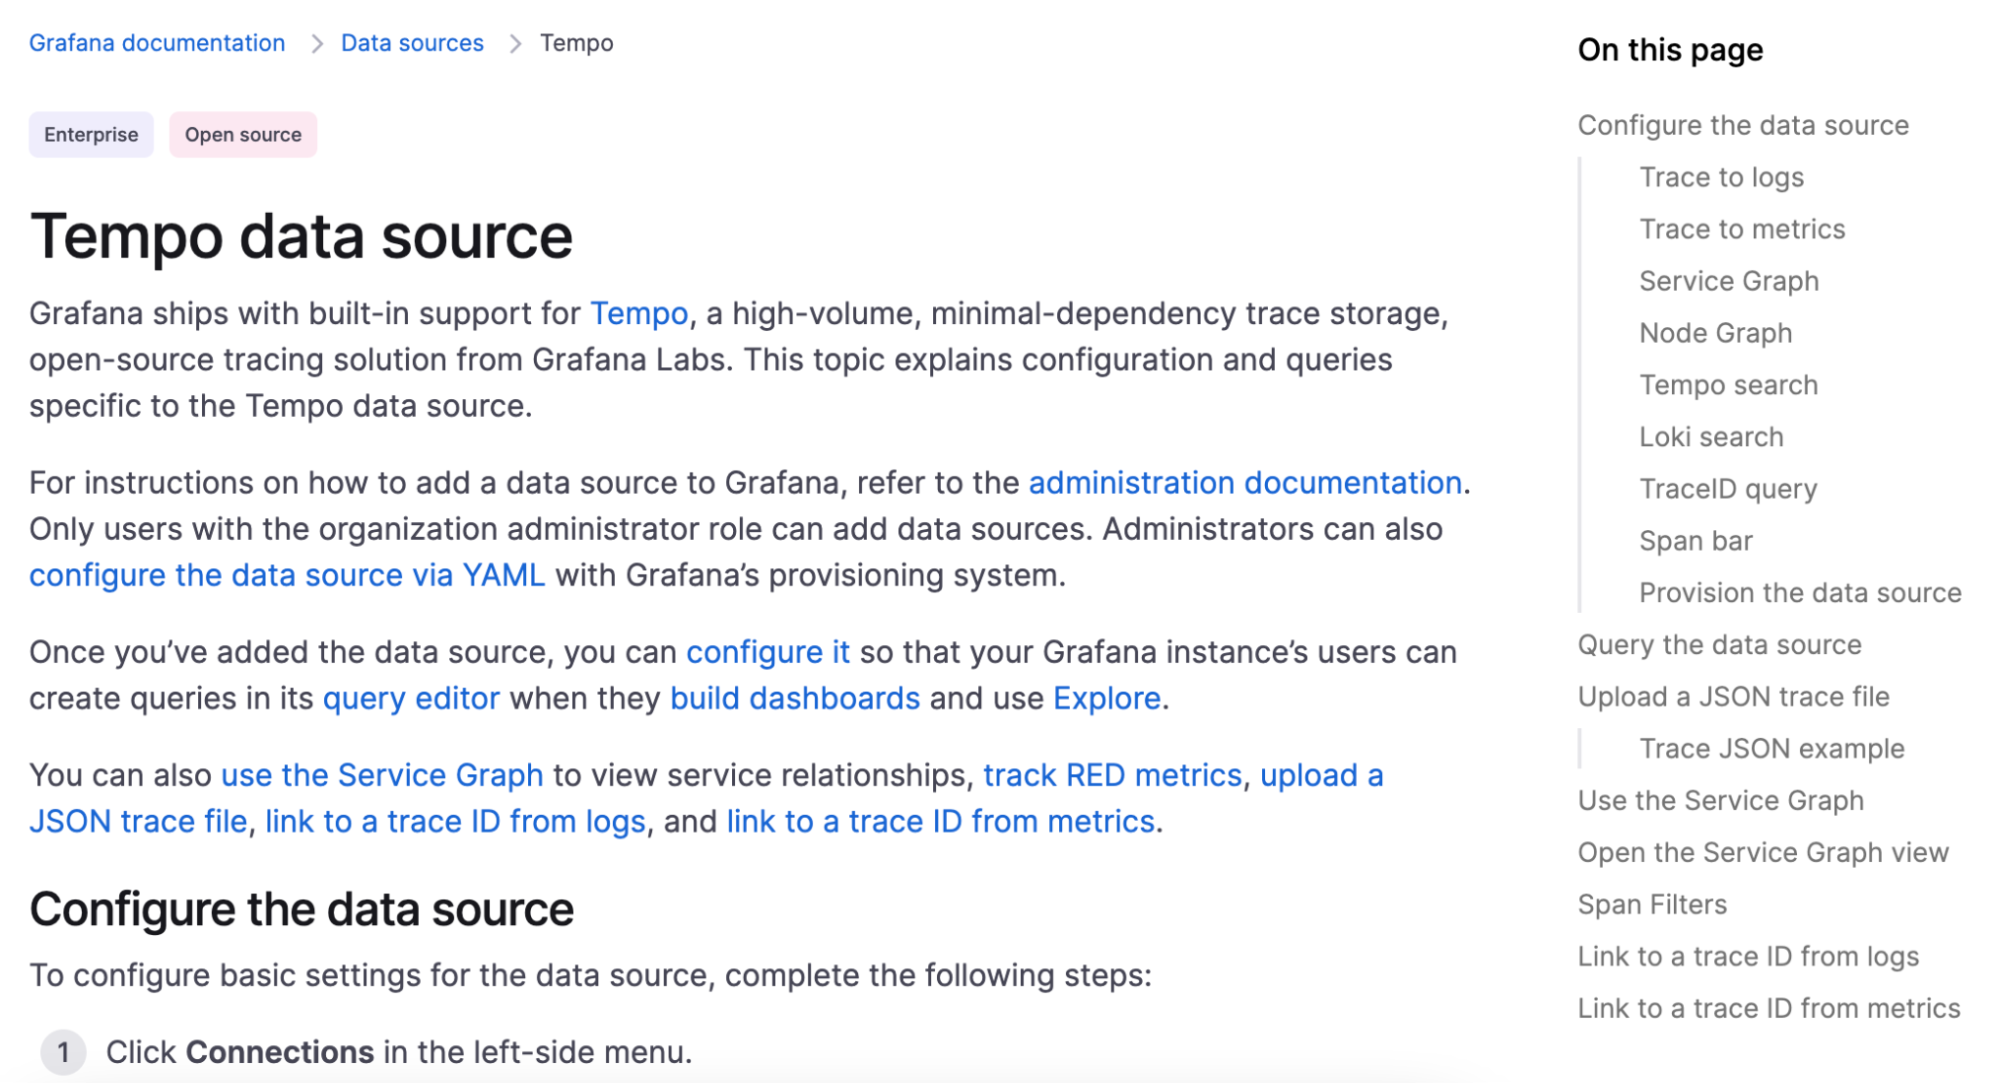 A screenshot of the Tempo data source documentation in the Grafana documentation.